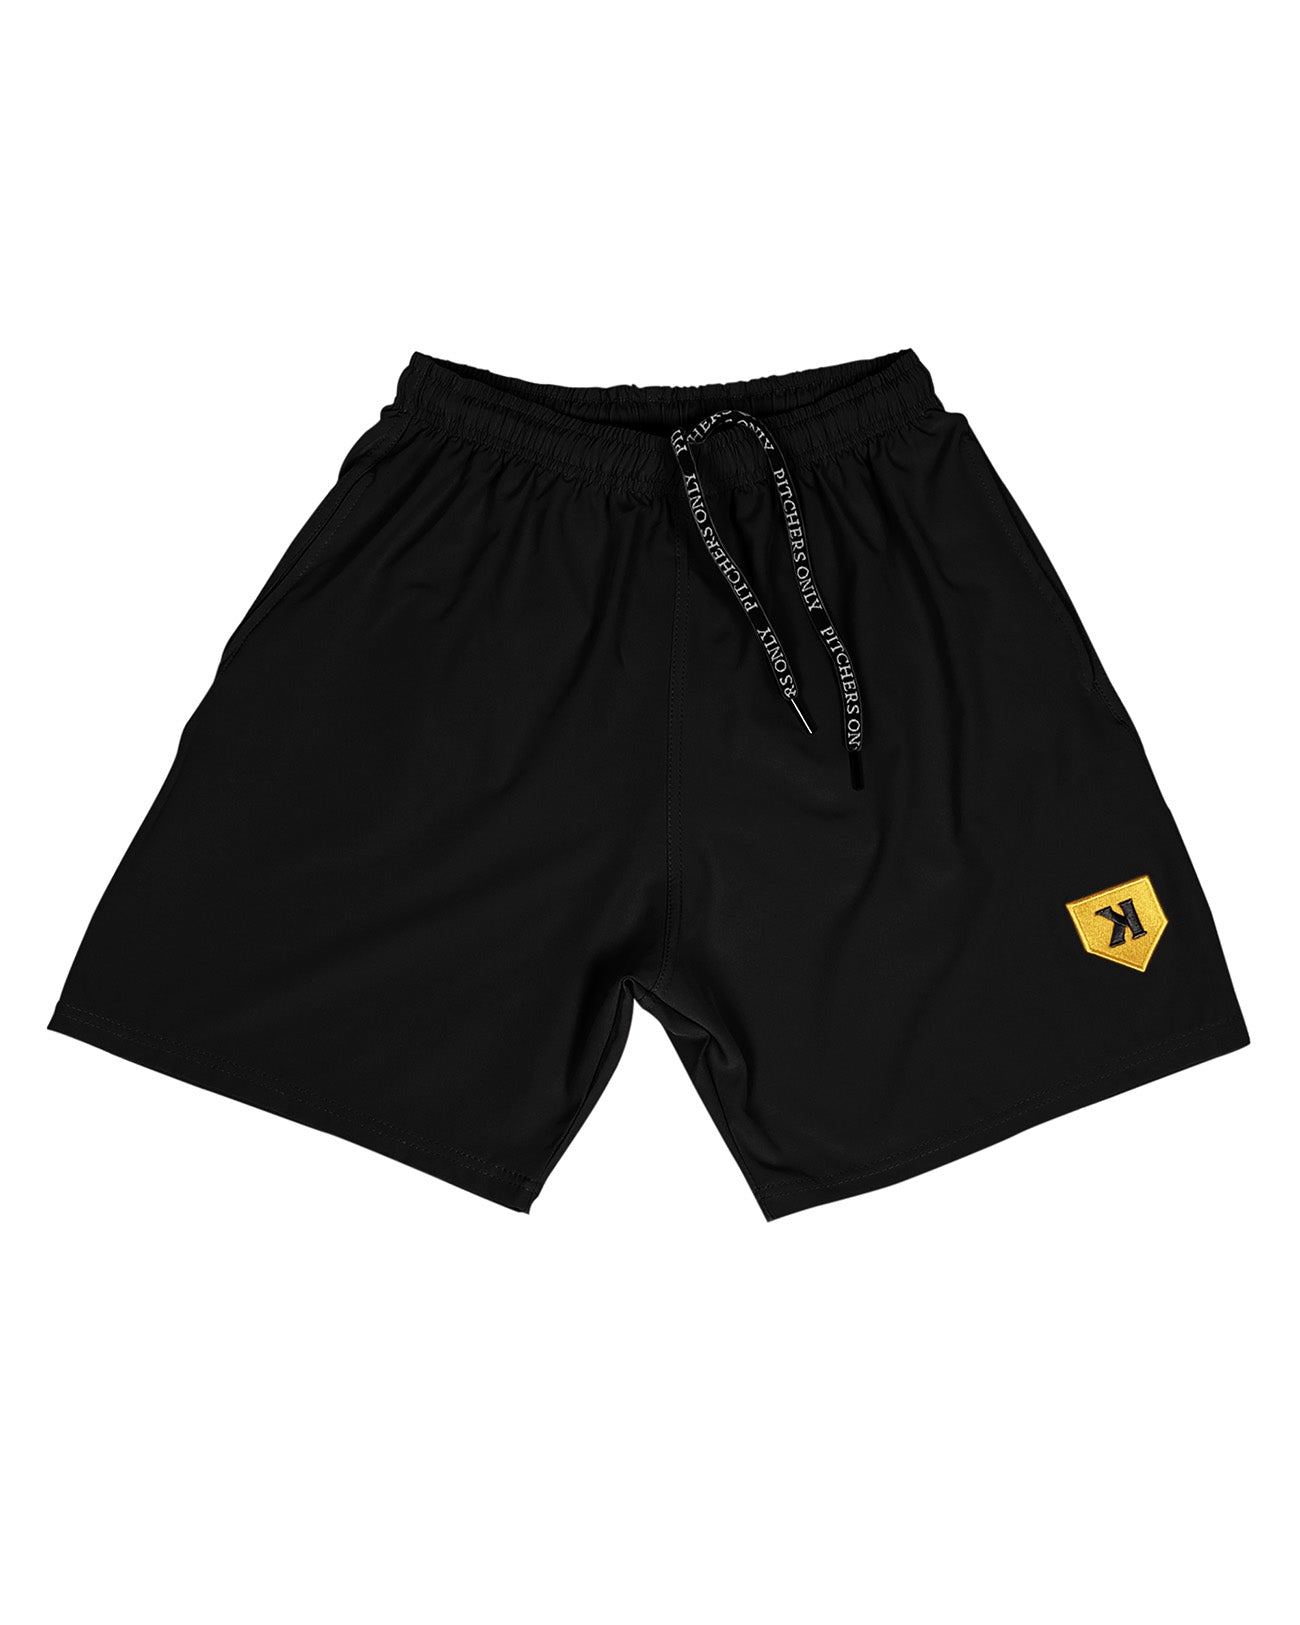 Black/Gold Training Shorts